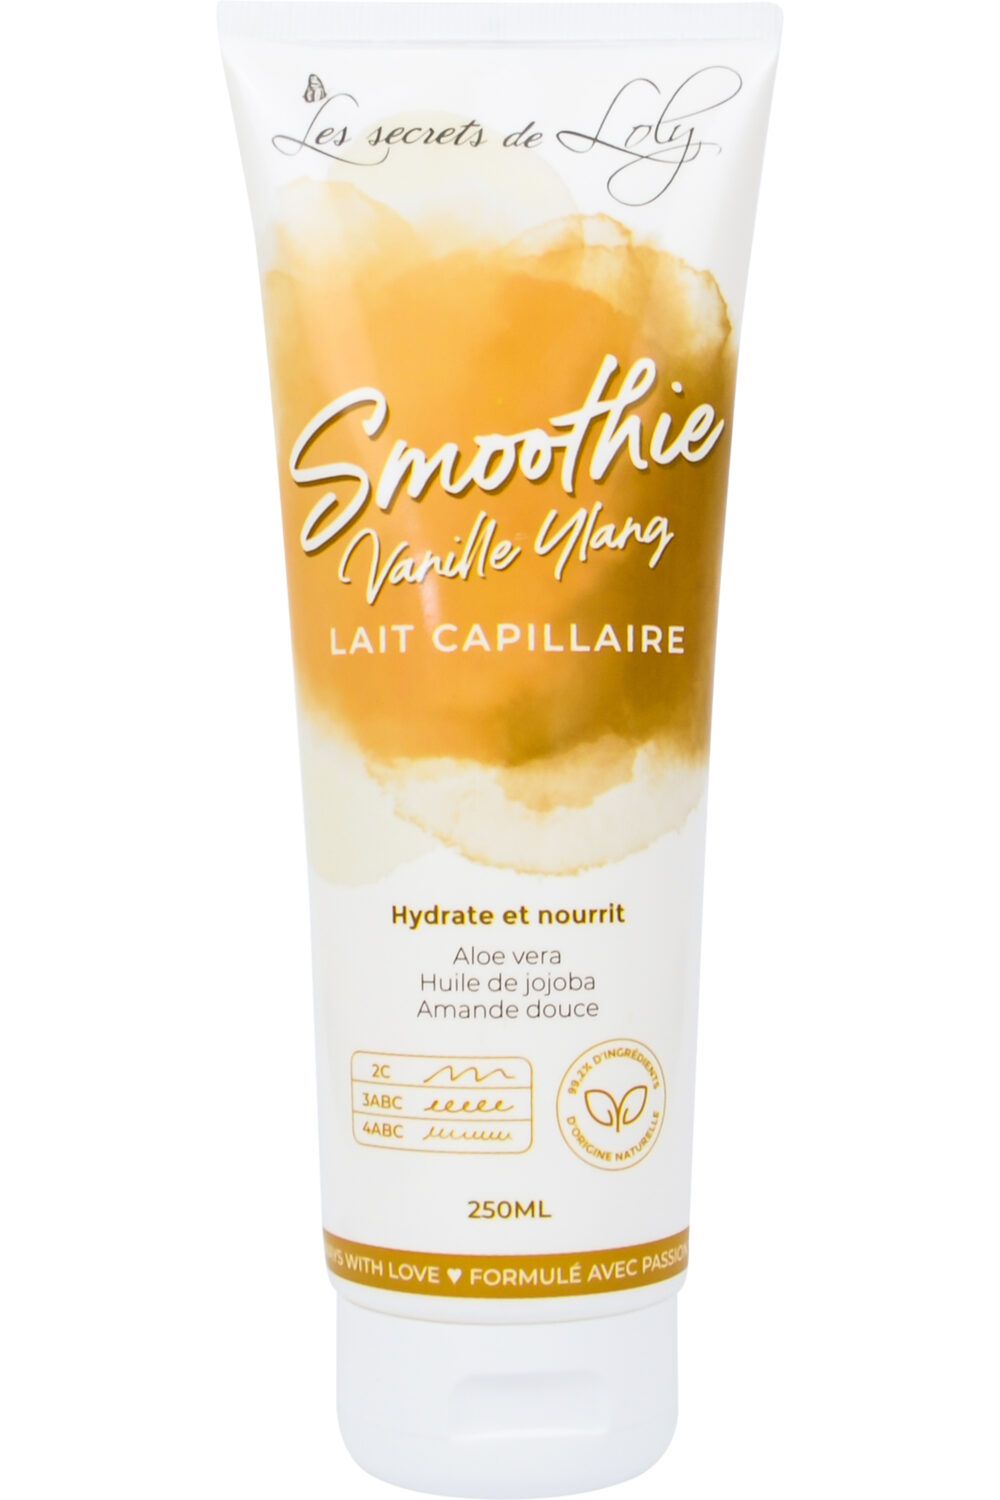 Les Secrets de Loly - Lait capilaire smoothie Vanille Ylang-ylang